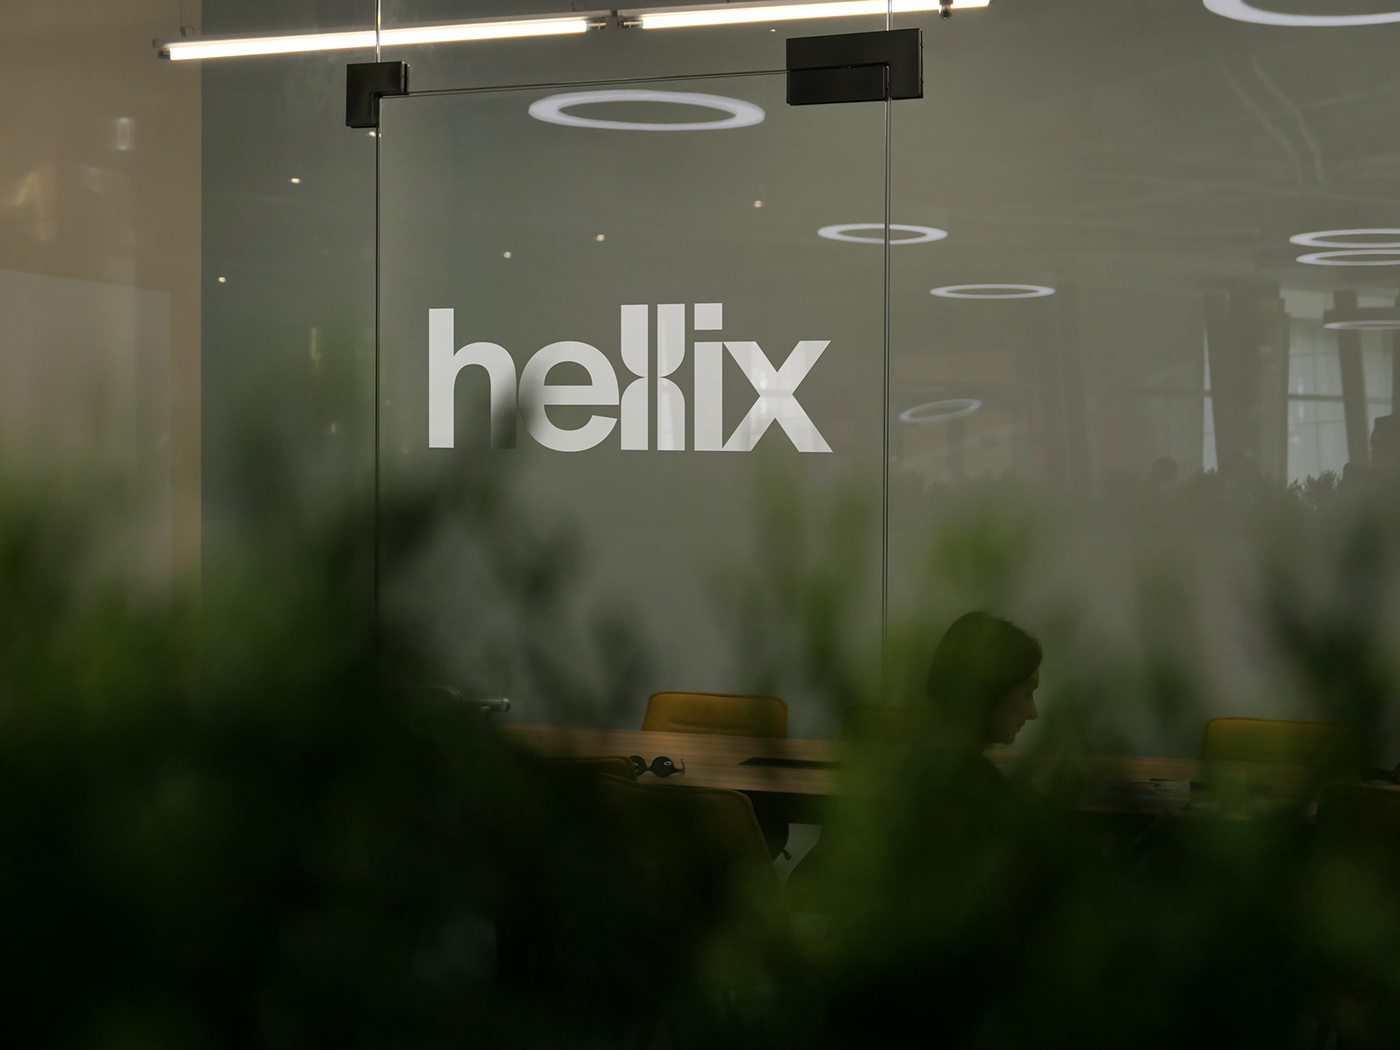 hellix / diagnostic laboratory branding